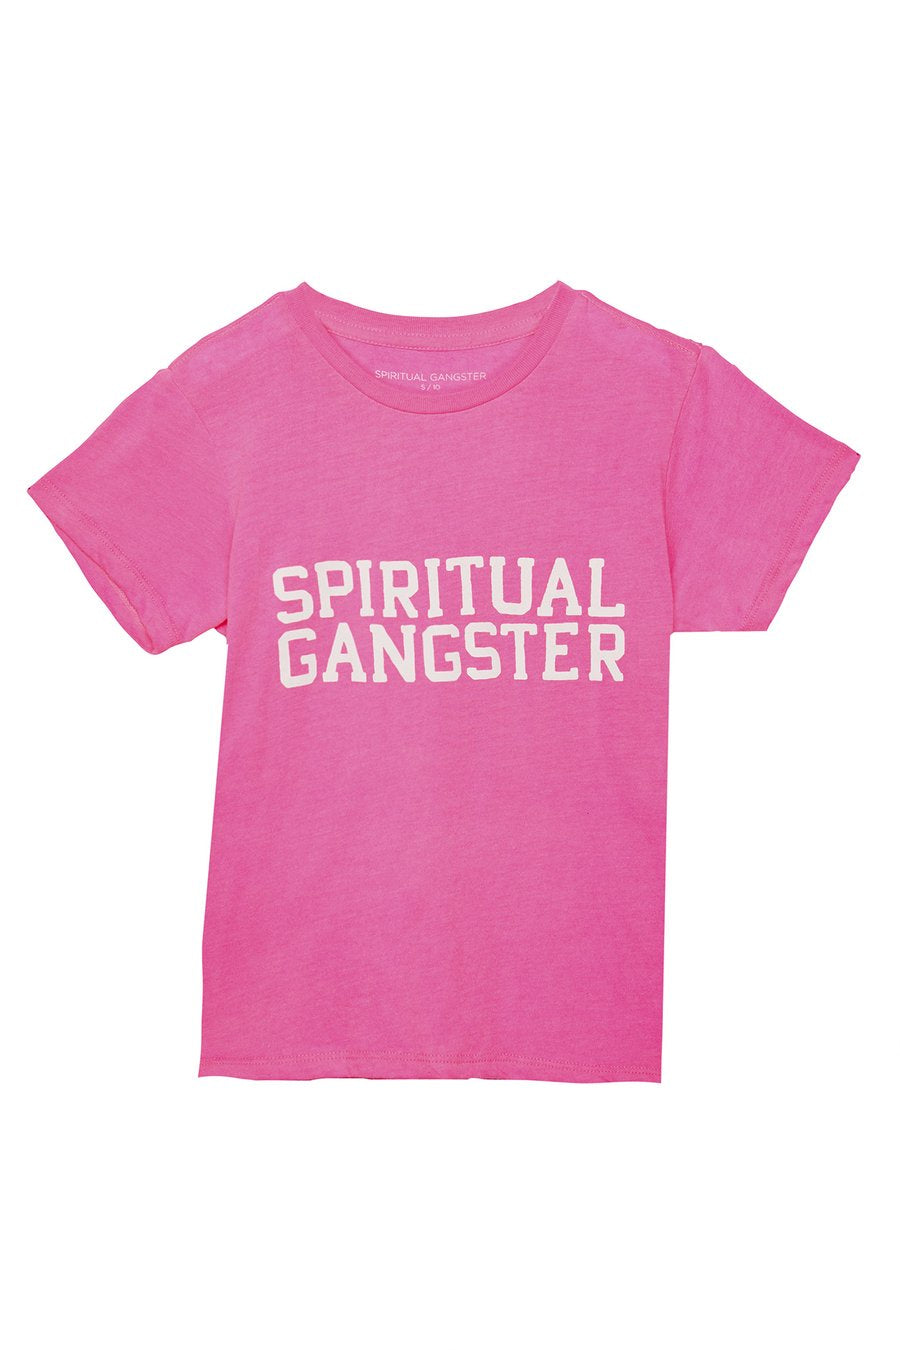 Spiritual Gangster - Varsity Kids Tee - Cotton Candy